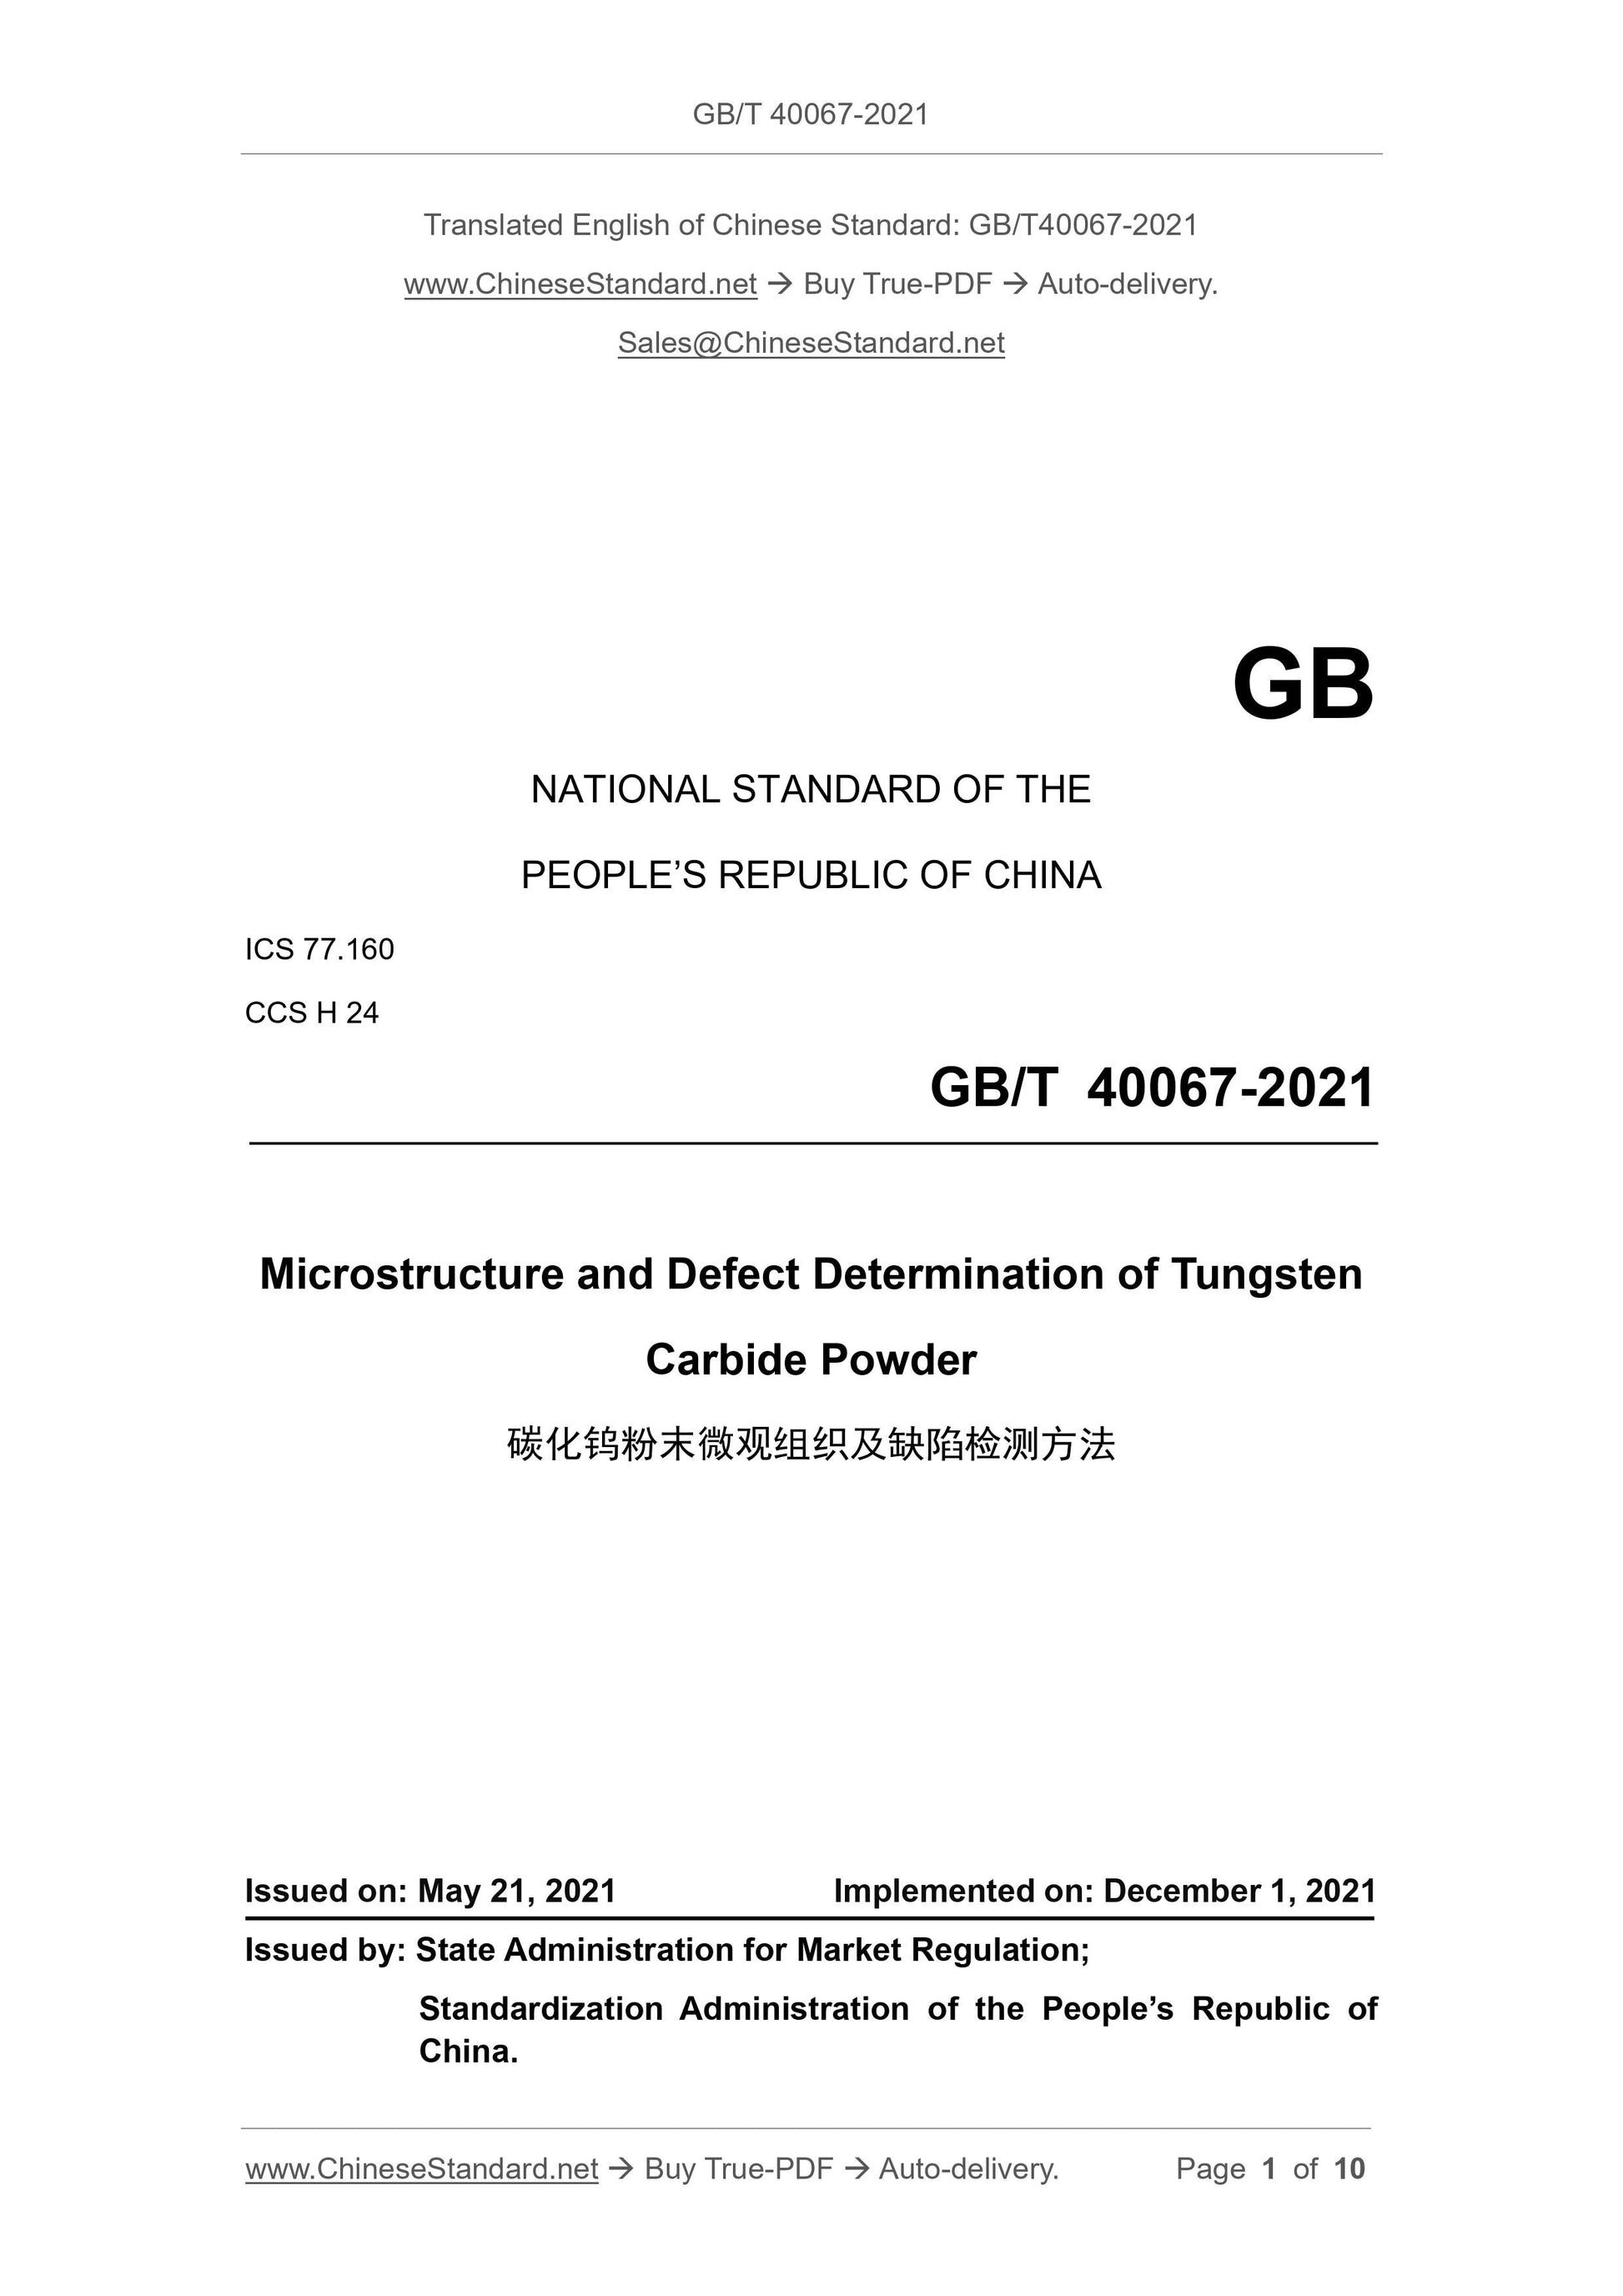 GBT40067-2021 Page 1